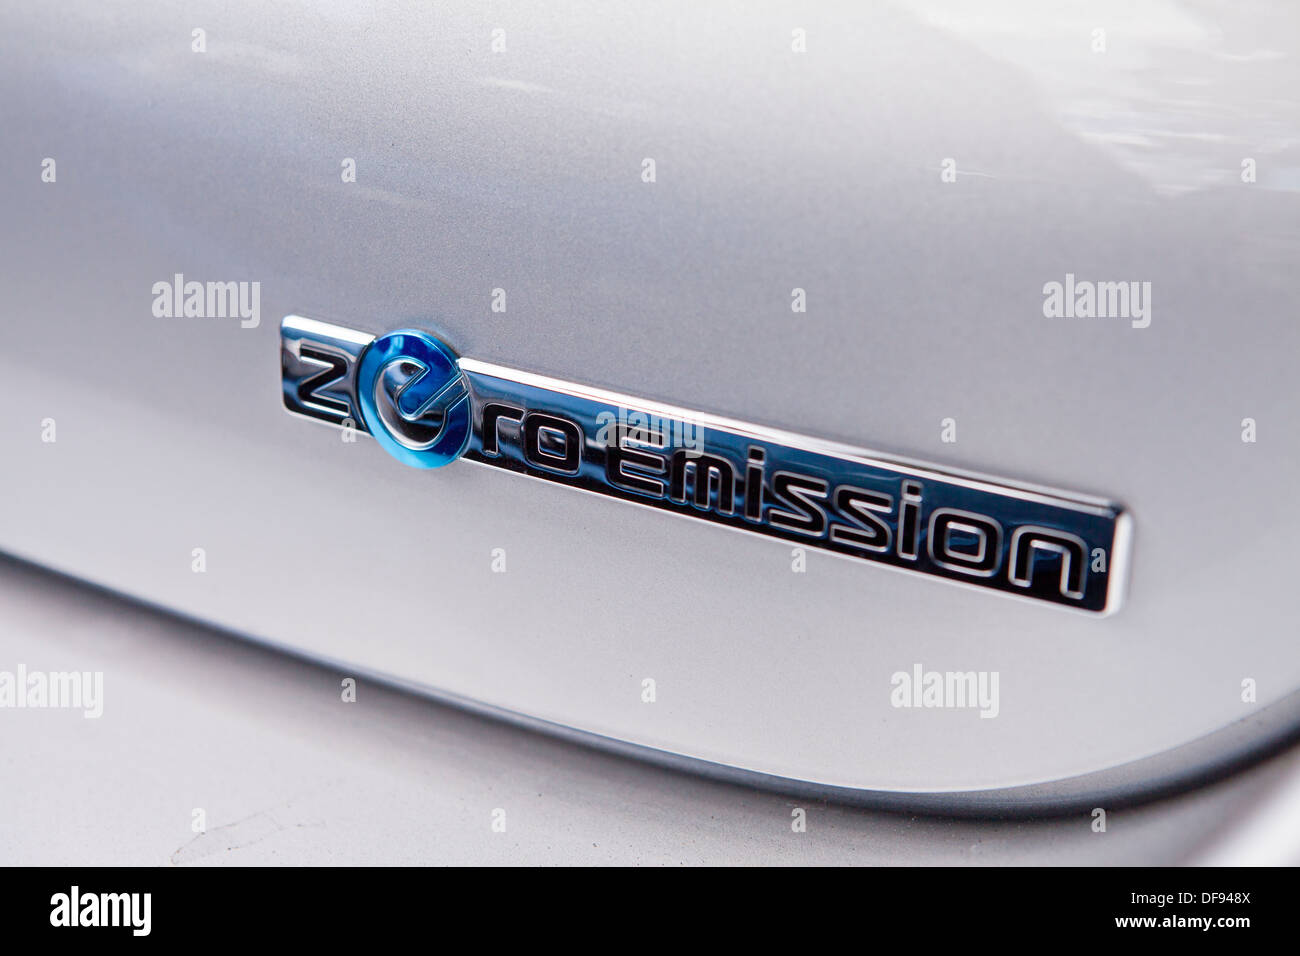 Nissan Leaf electric car Zero Emission badging Stock Photo